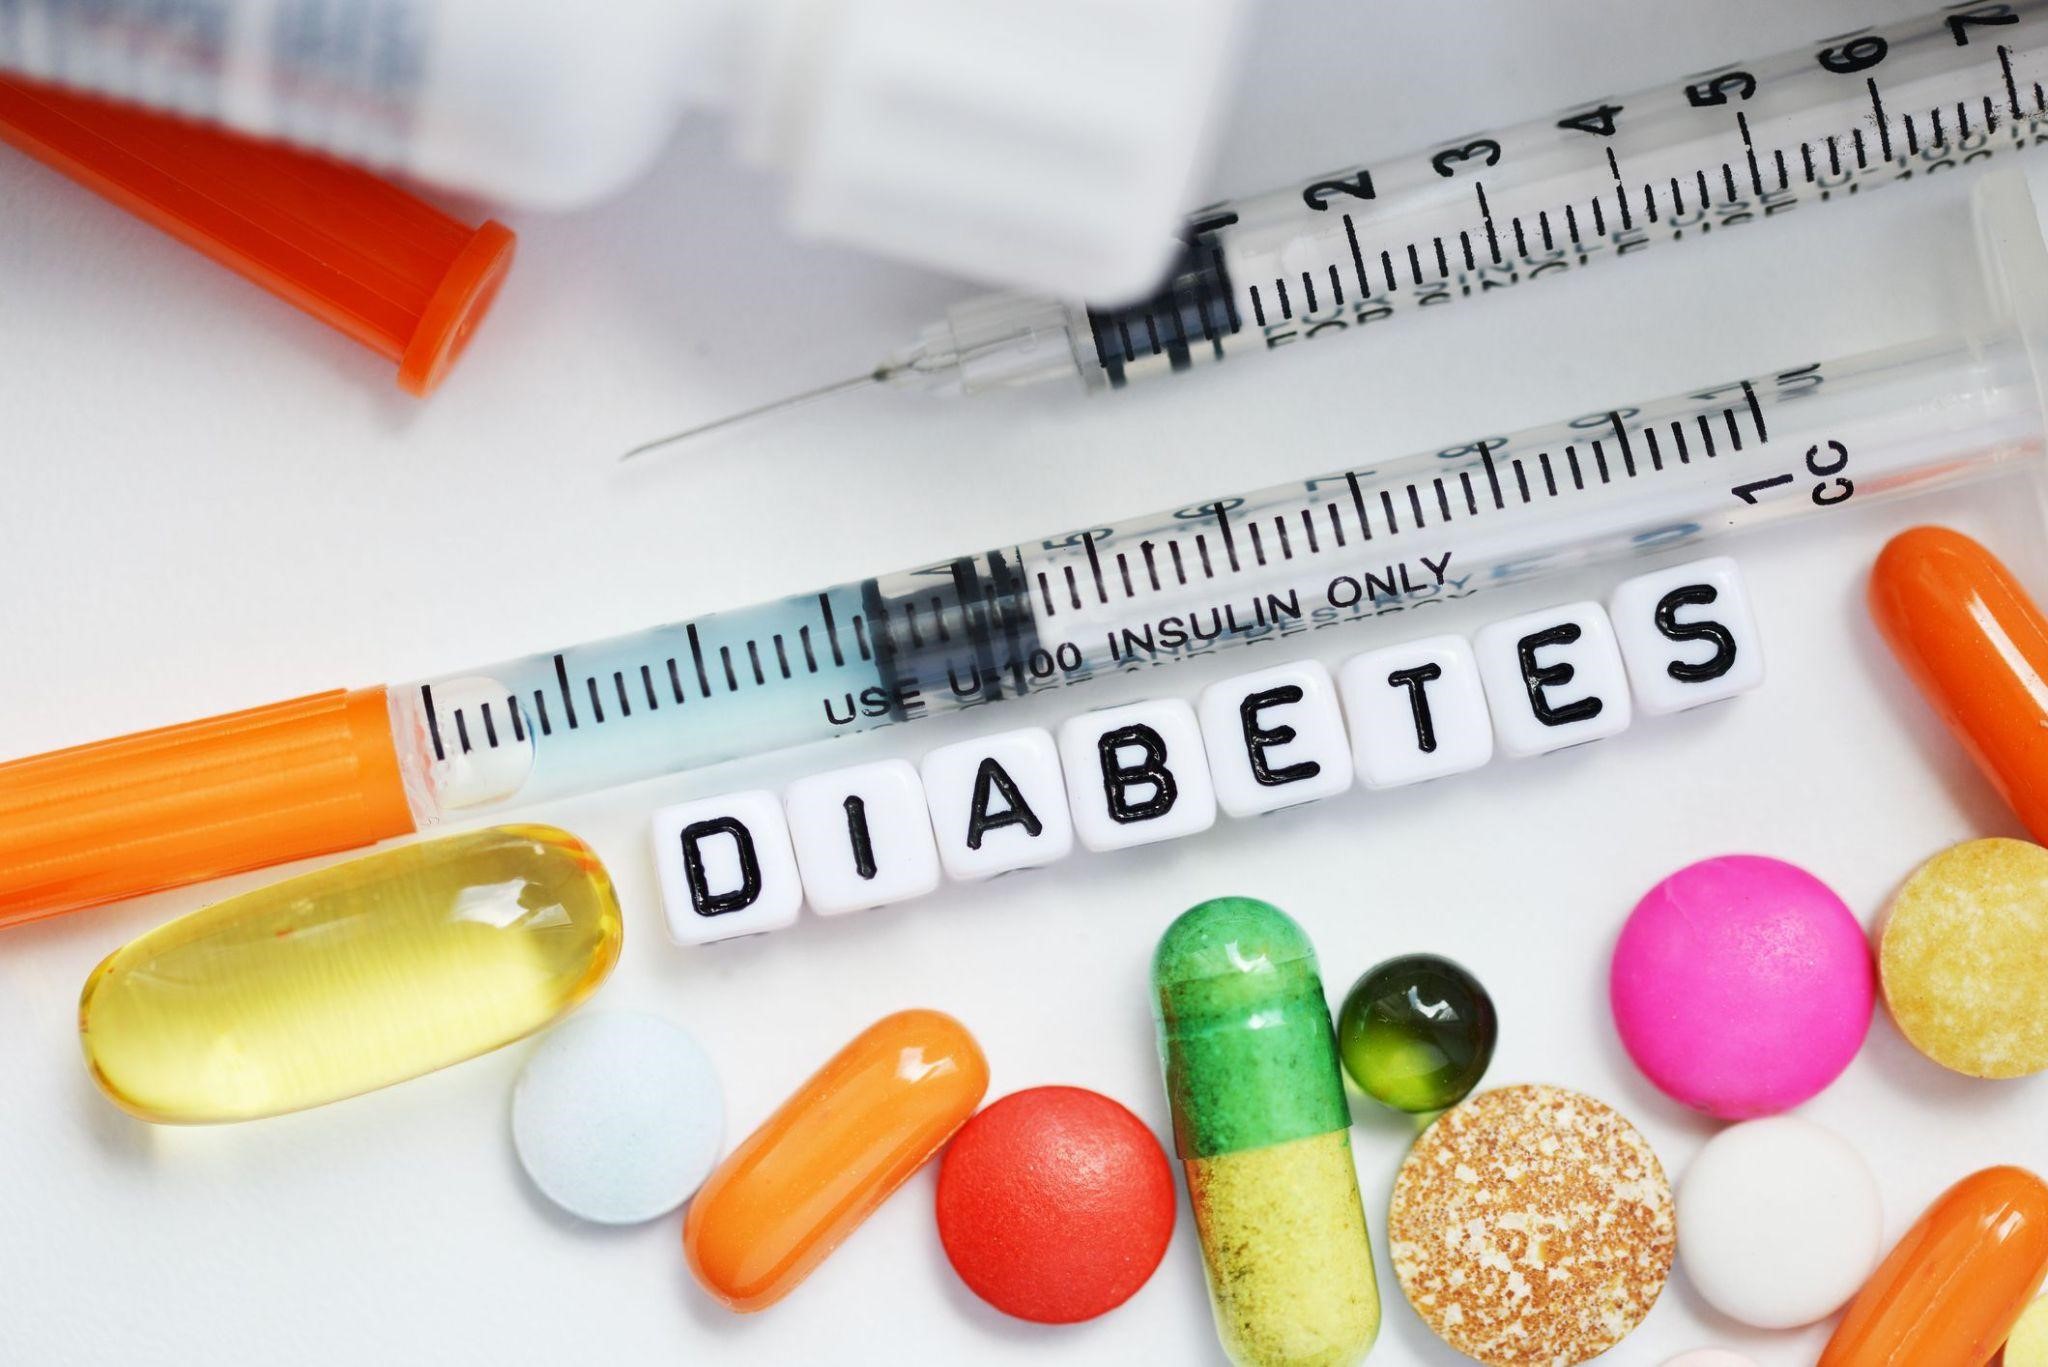 The development of new diabetes treatments